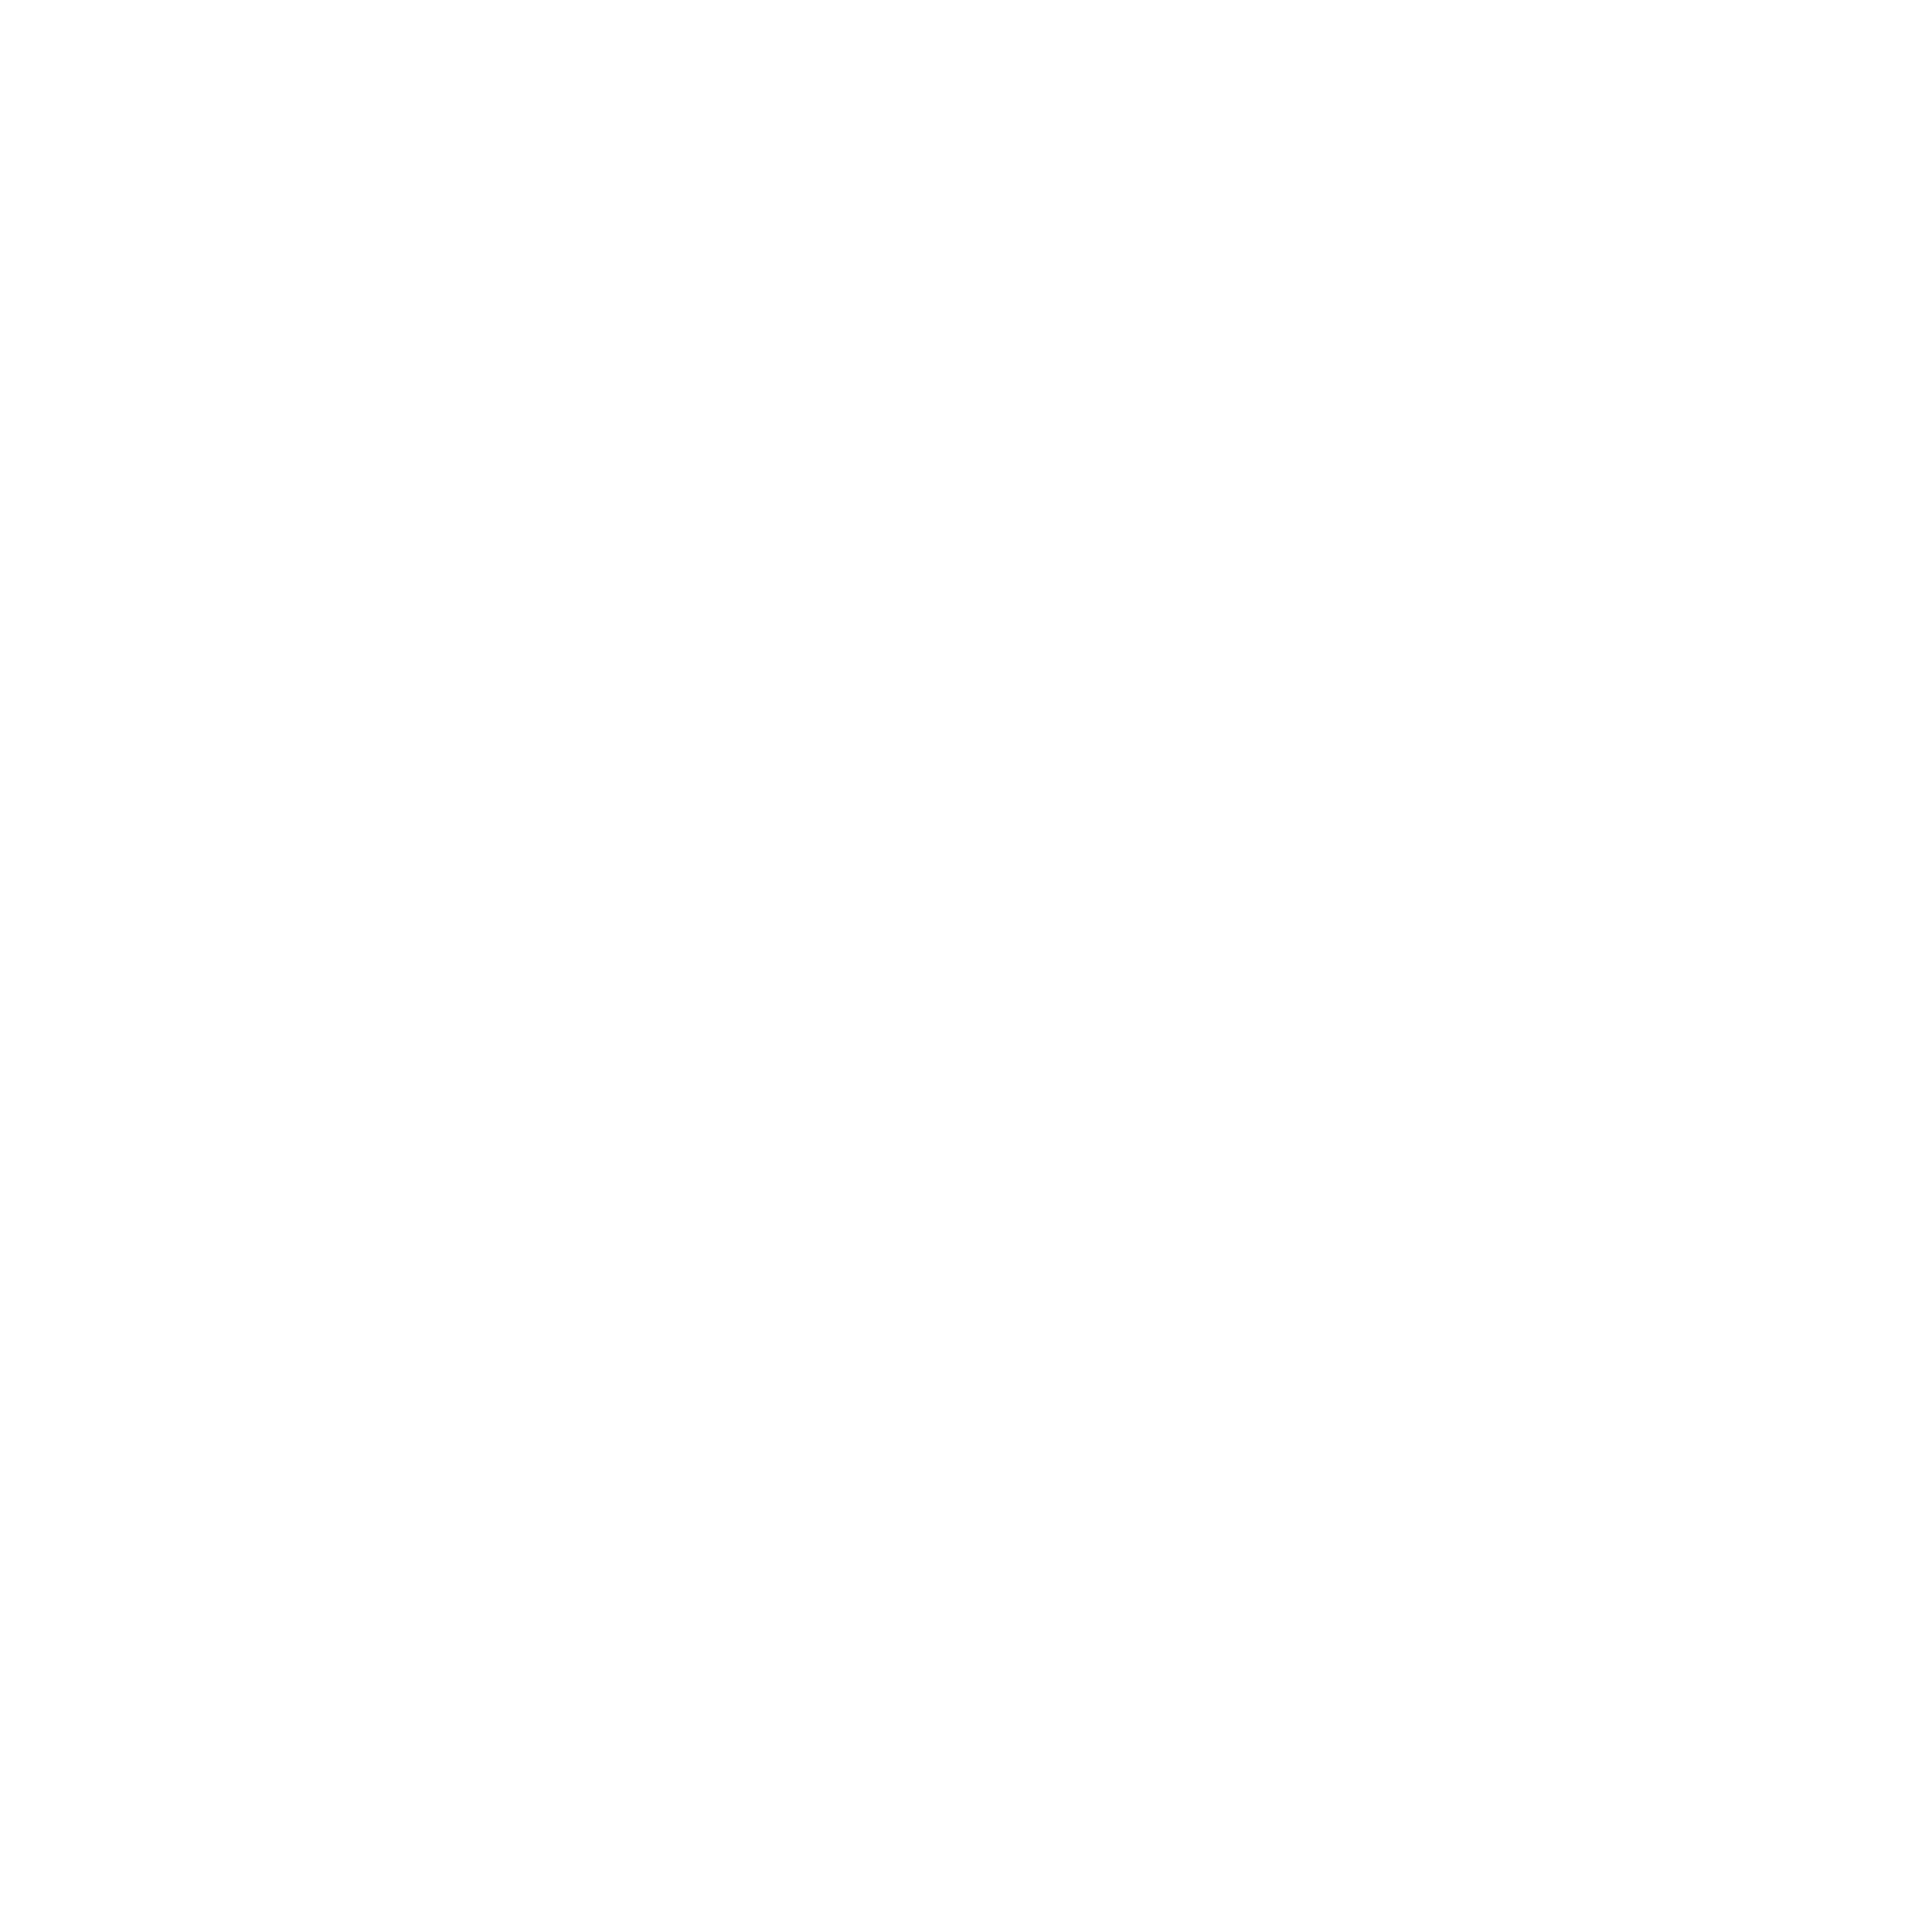 The Northern Studios